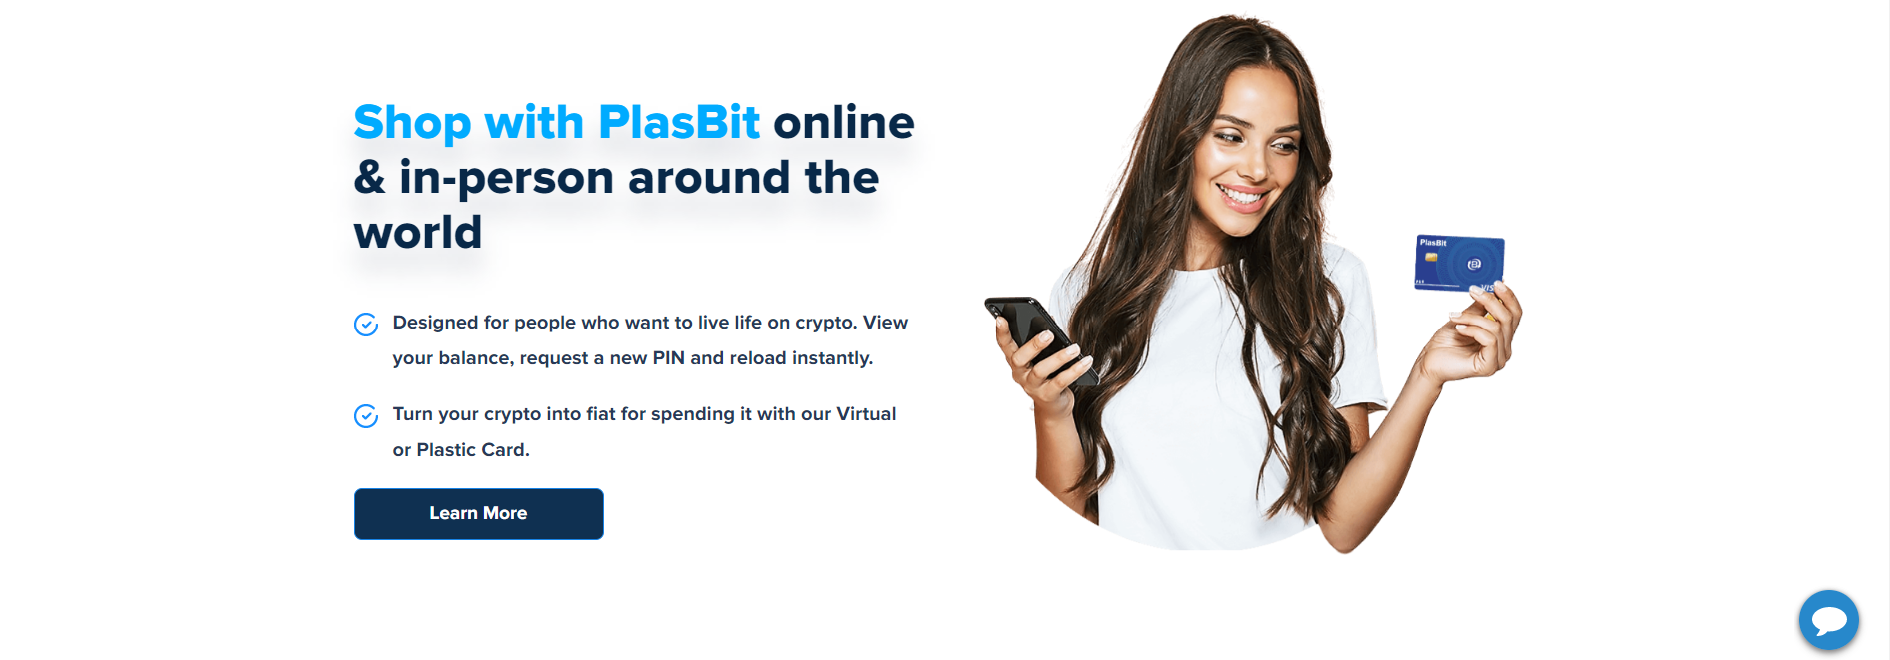 Shop with PlasBit online & in-person around the world